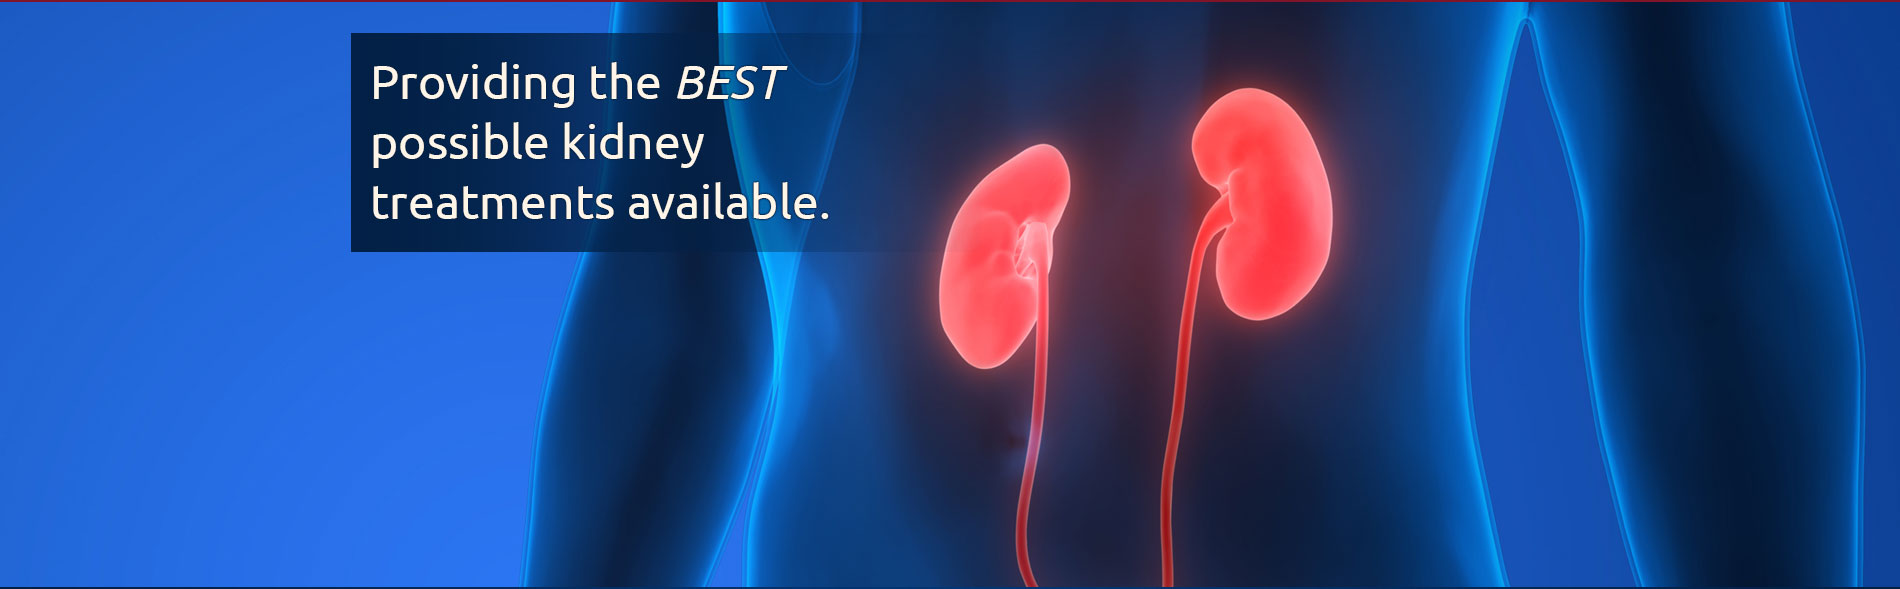 Kidney treatments Slide Image